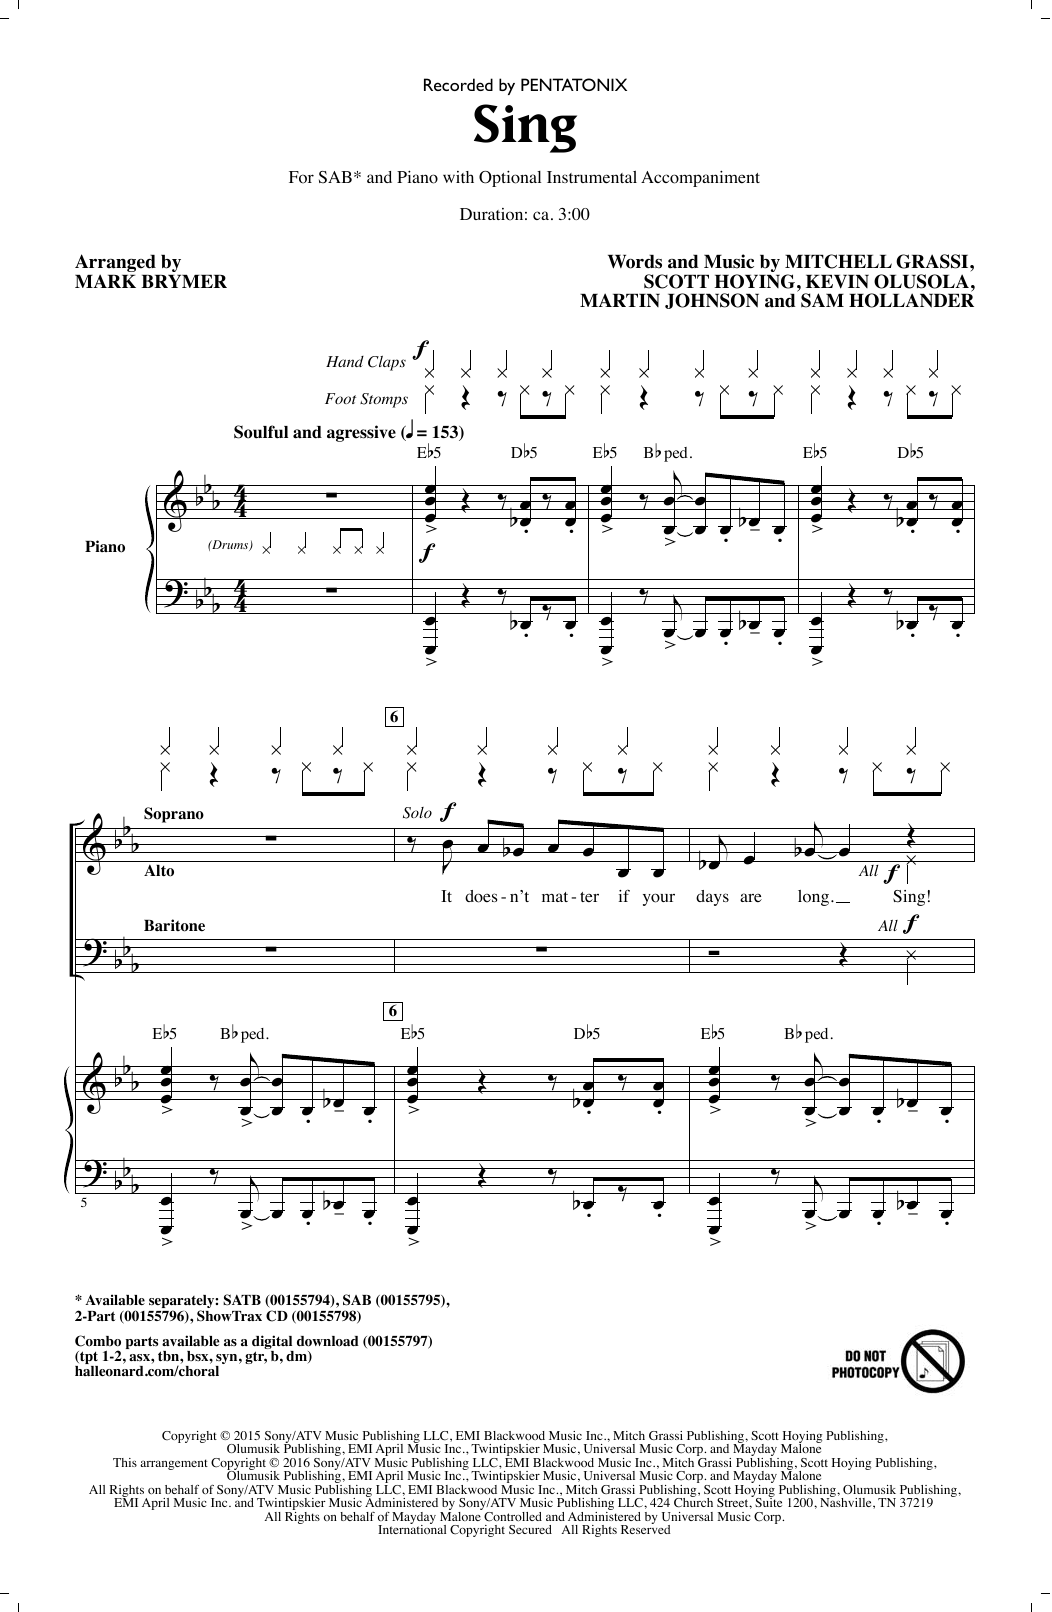 Pentatonix Sing (arr. Mark Brymer) Sheet Music Notes & Chords for SAB - Download or Print PDF